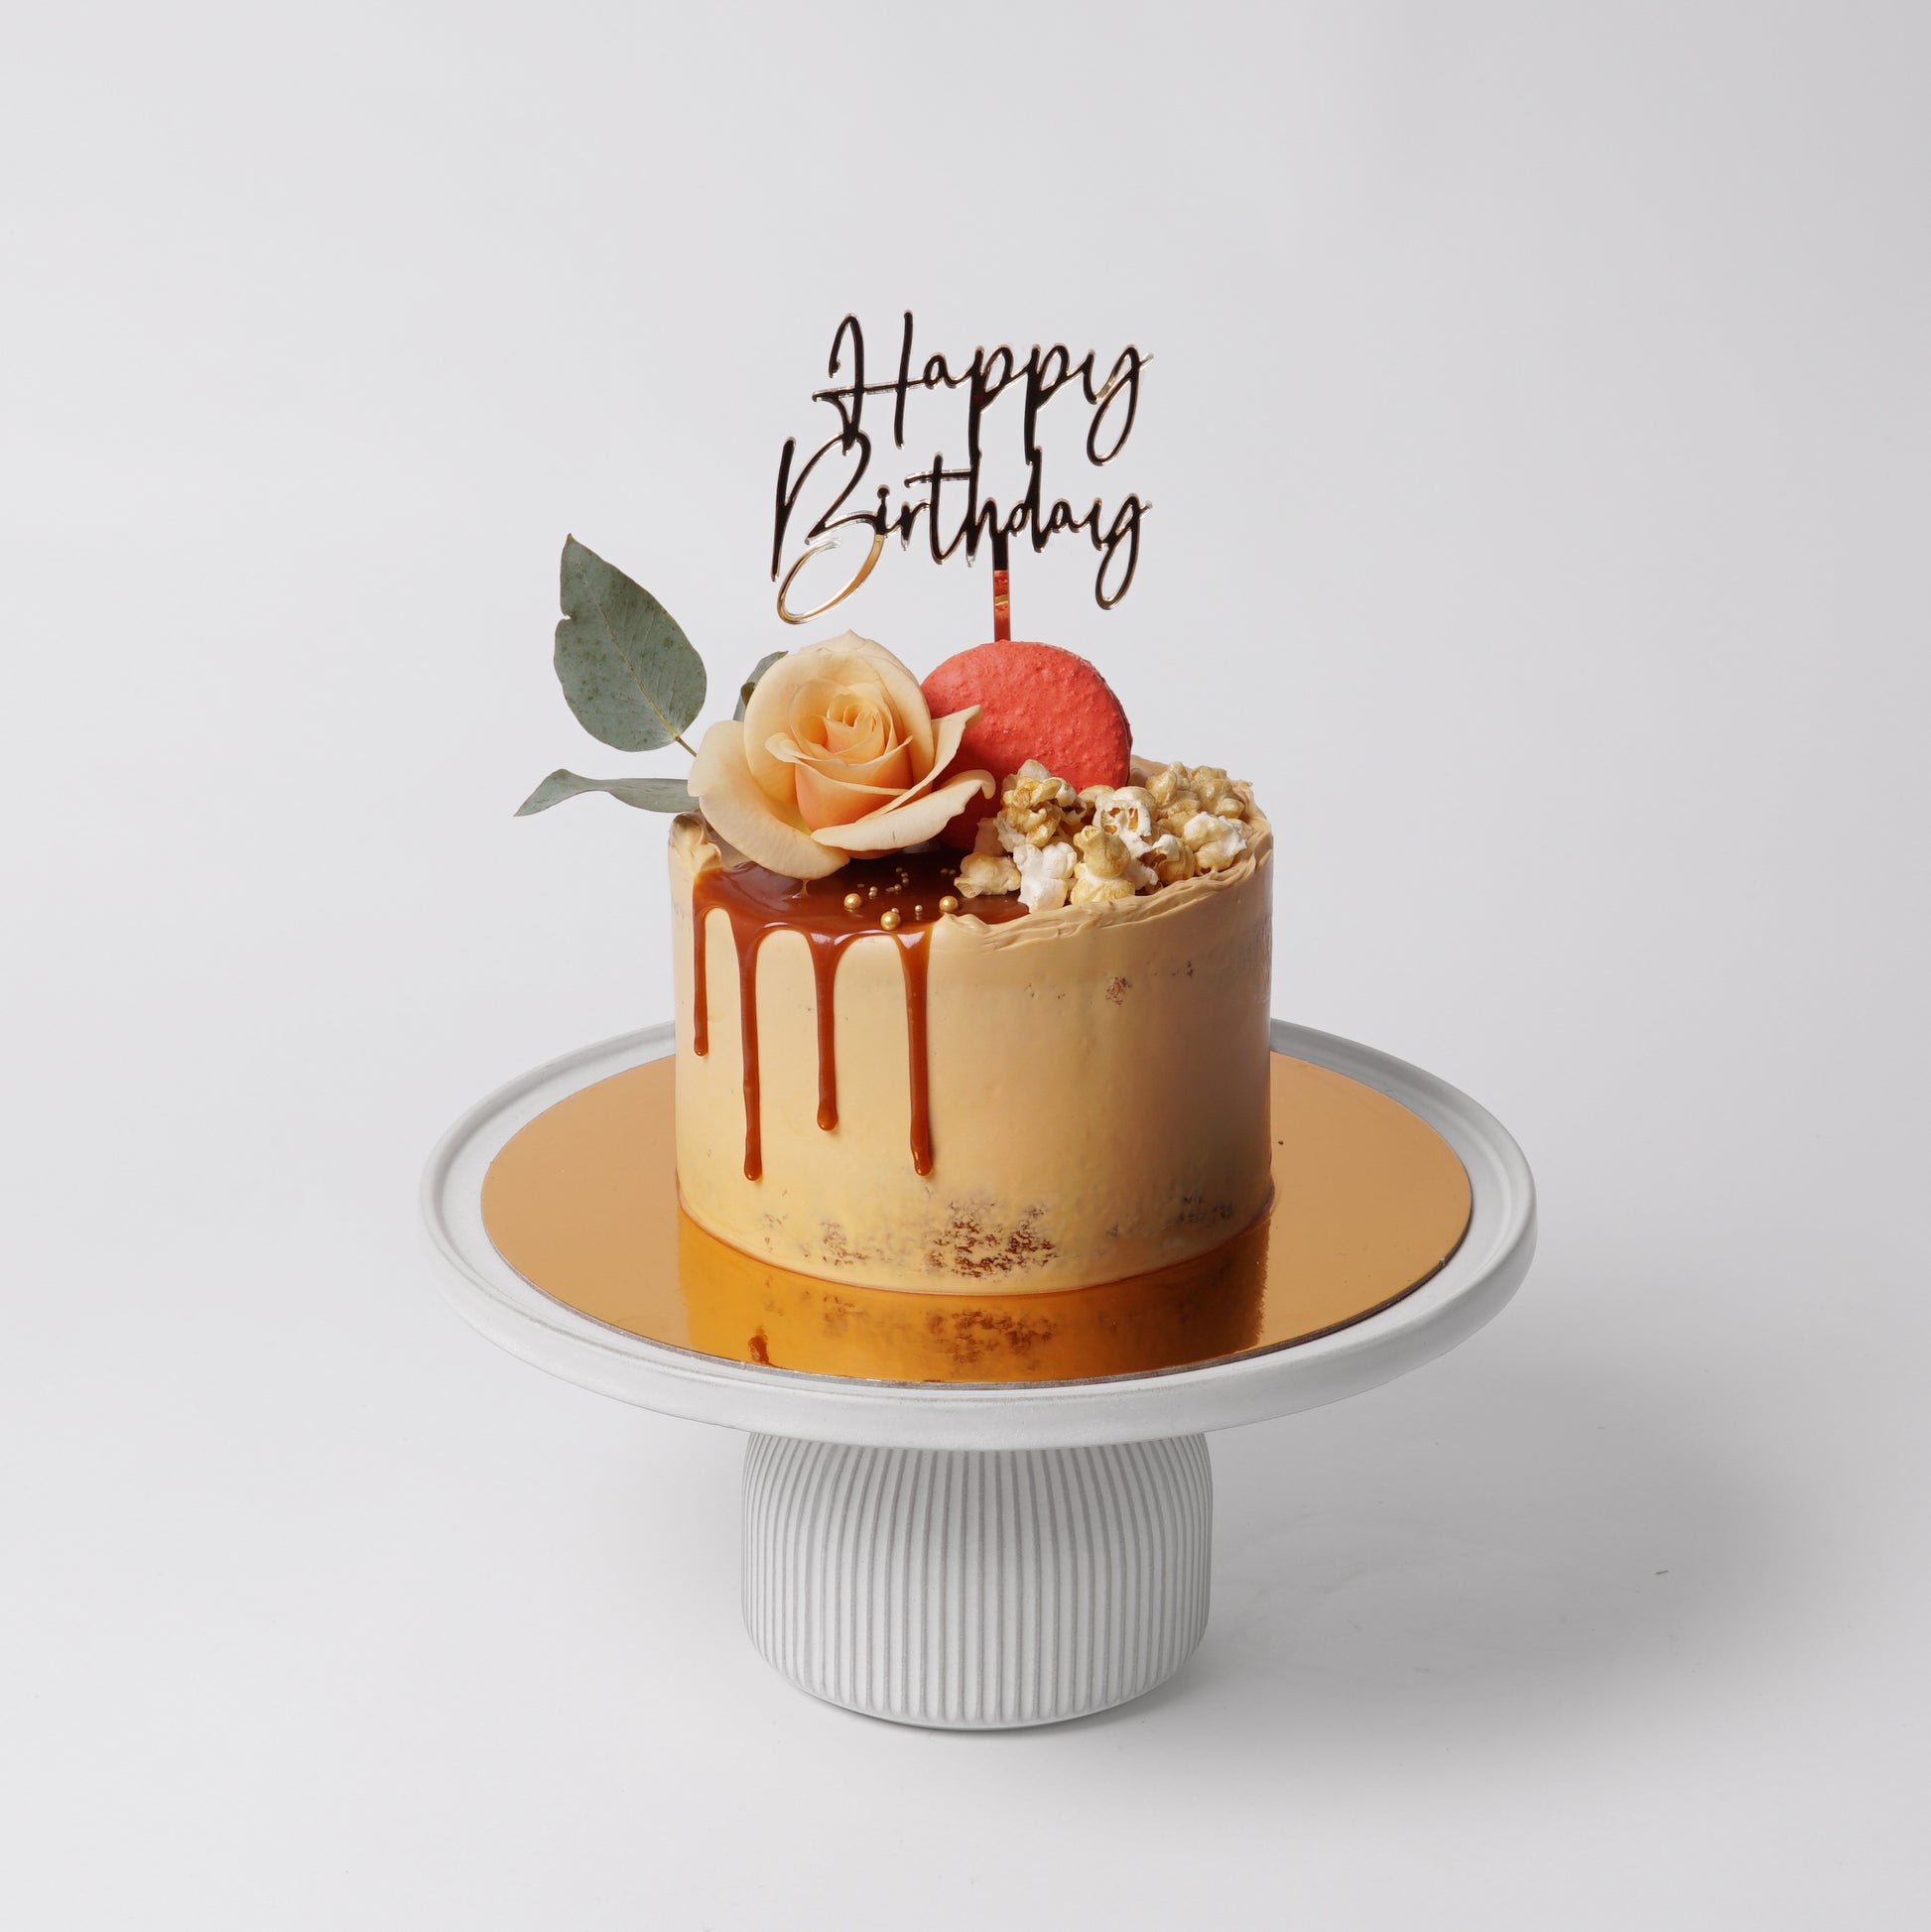 BANANA & SALTED CARAMEL CAKE WITH HAPPY BIRTHDAY MIRROR CAKE TOPPER